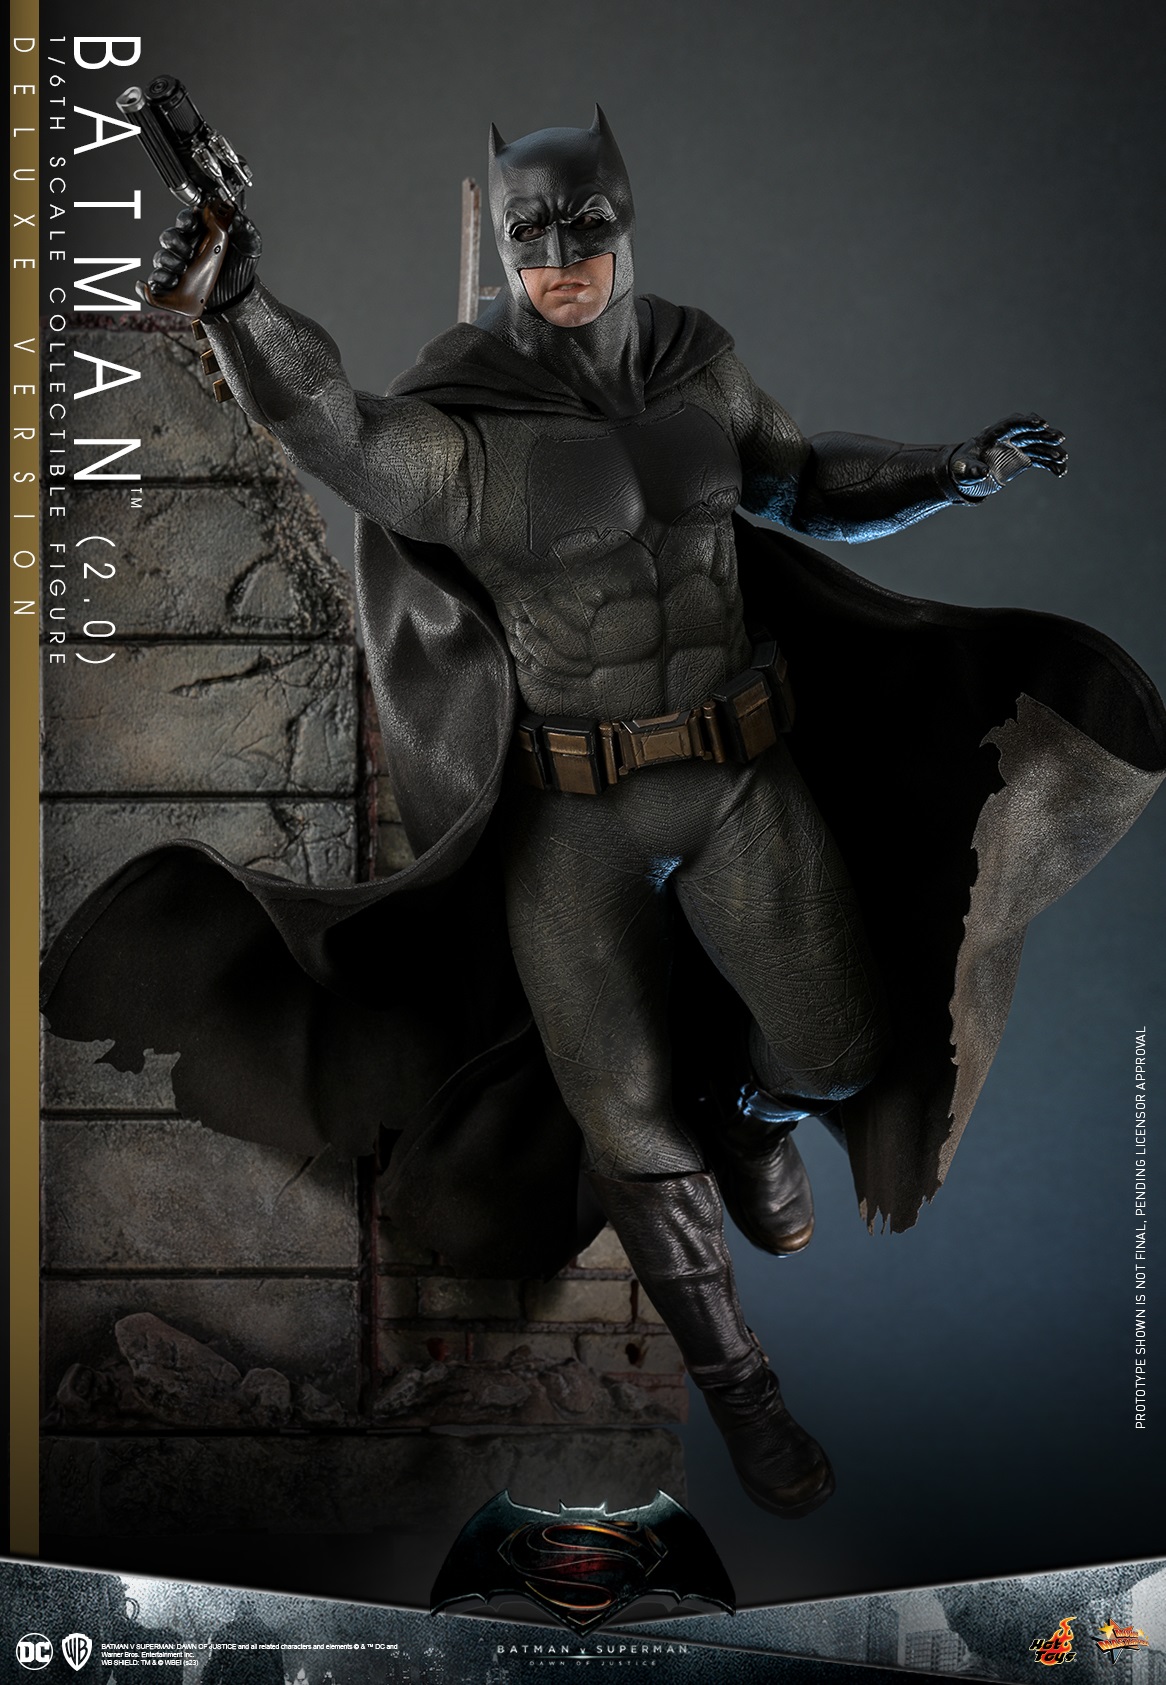 DC - NEW PRODUCT: HOT TOYS - "Batman v Superman: Dawn of Justice" - Batman 2.0 Deluxe Edition MMS732/Regular MMS731 0593